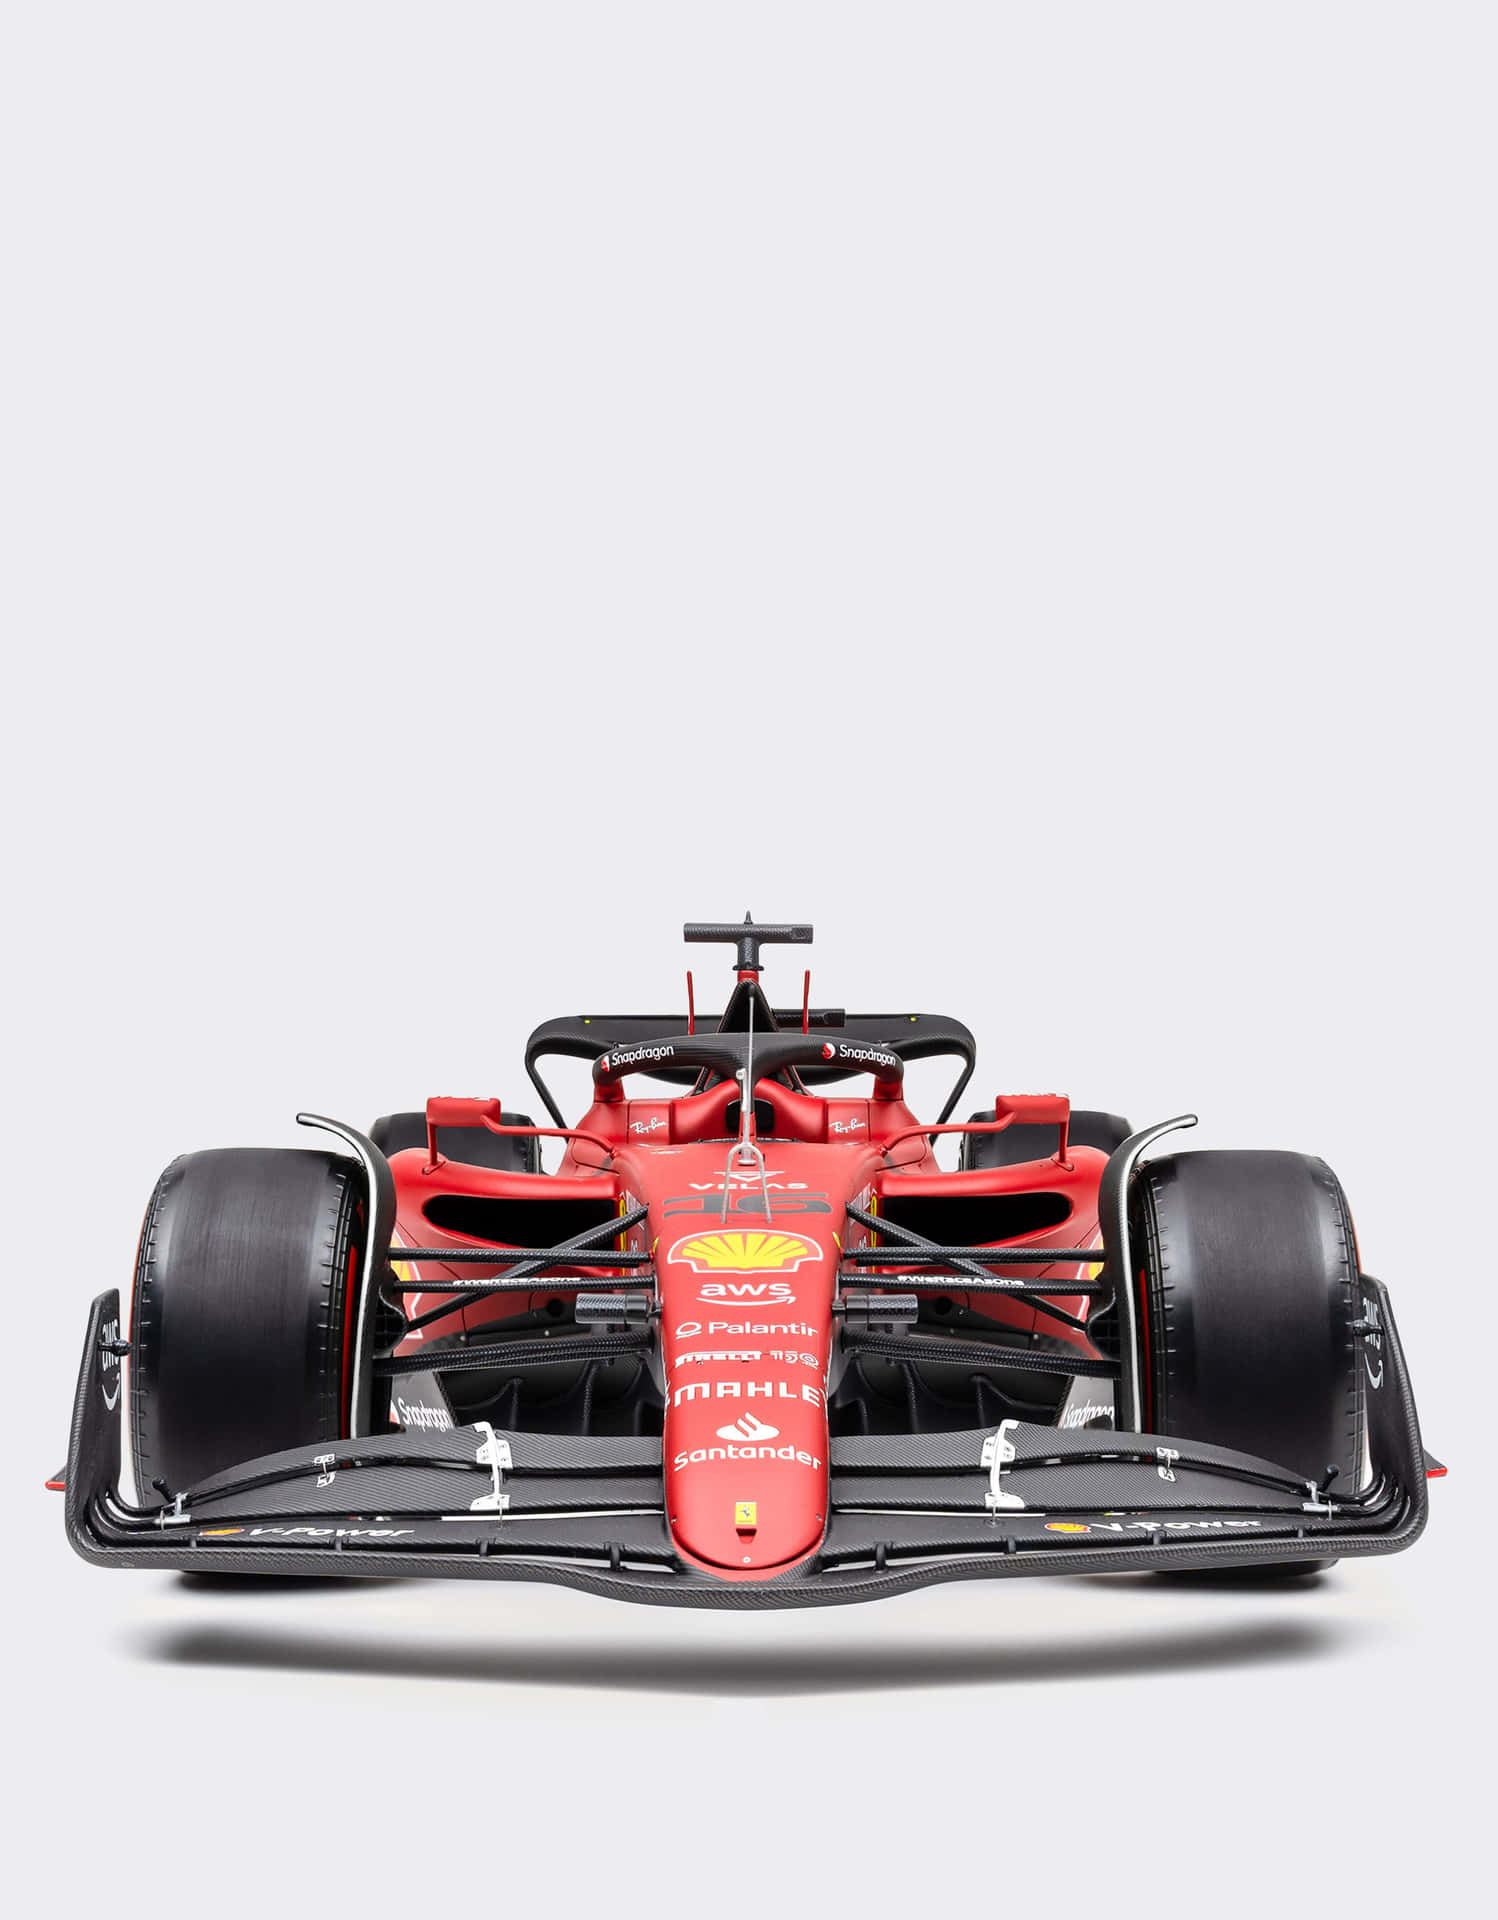 Ferrari F1 Racecar Front View Wallpaper